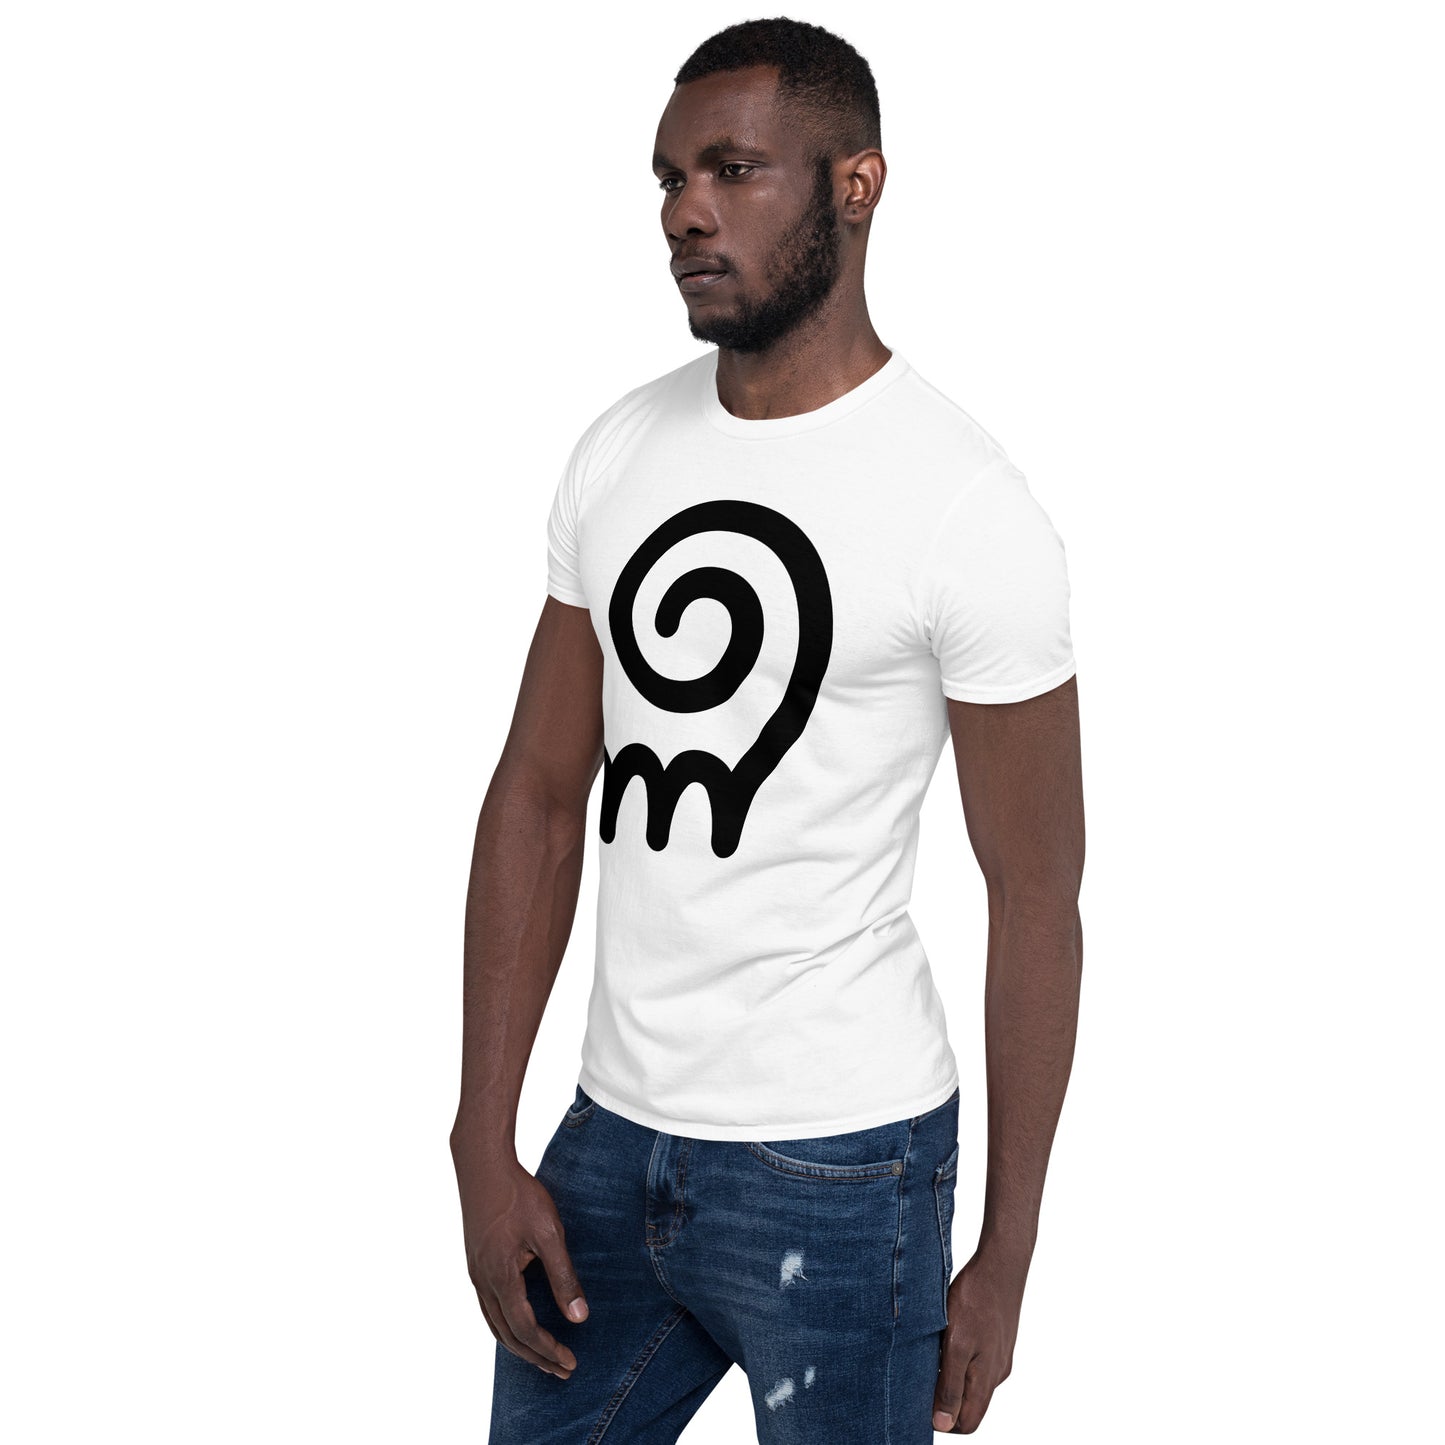 MonkeyTail 'M' Logo graphic t-shirt